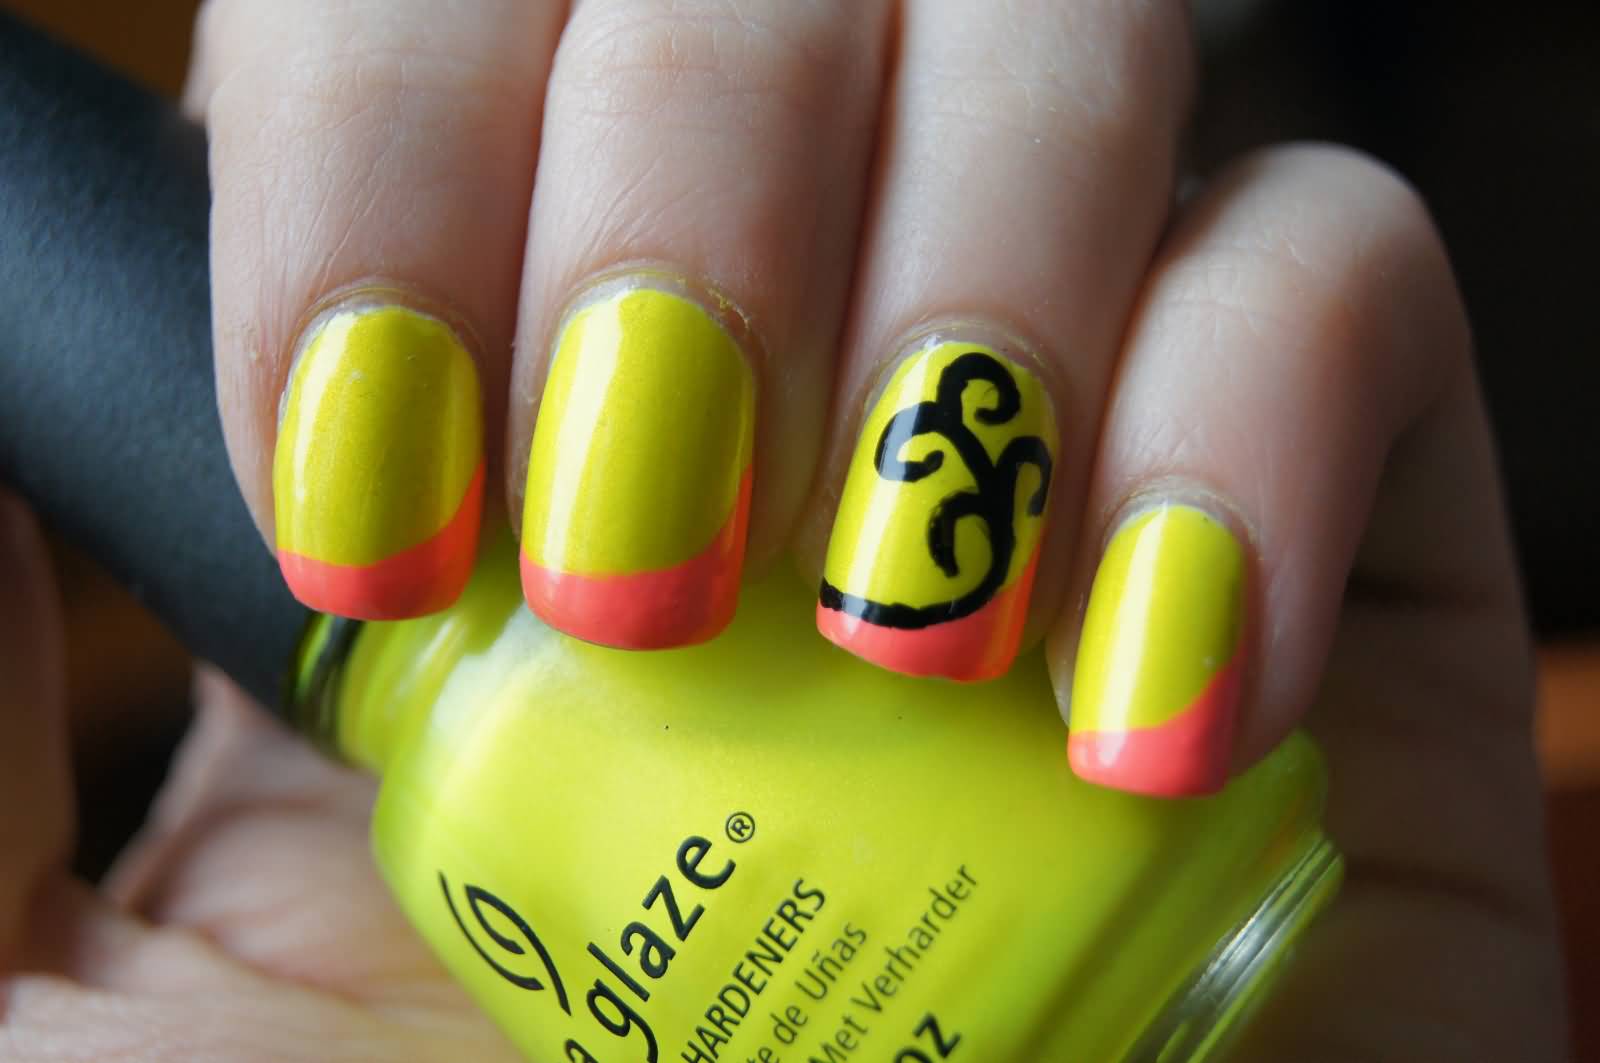 Neon Yellow And Orange Tip With Black Swirl Design Nail Art